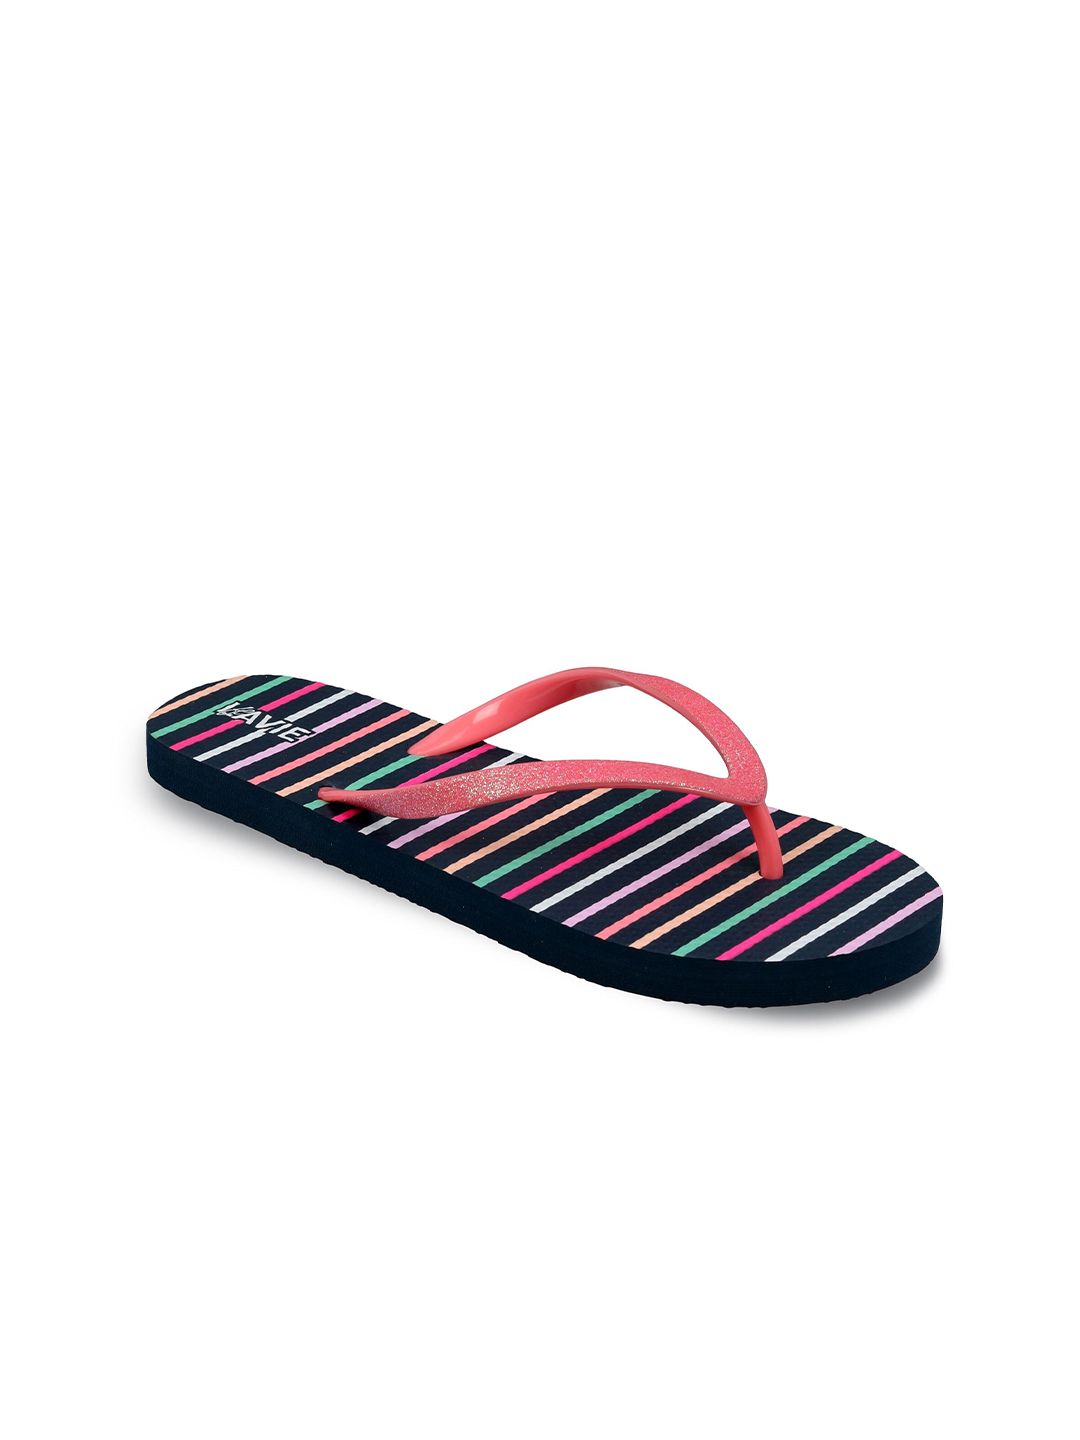 Lavie Women Navy Blue & Pink Striped Thong Flip-Flops Price in India